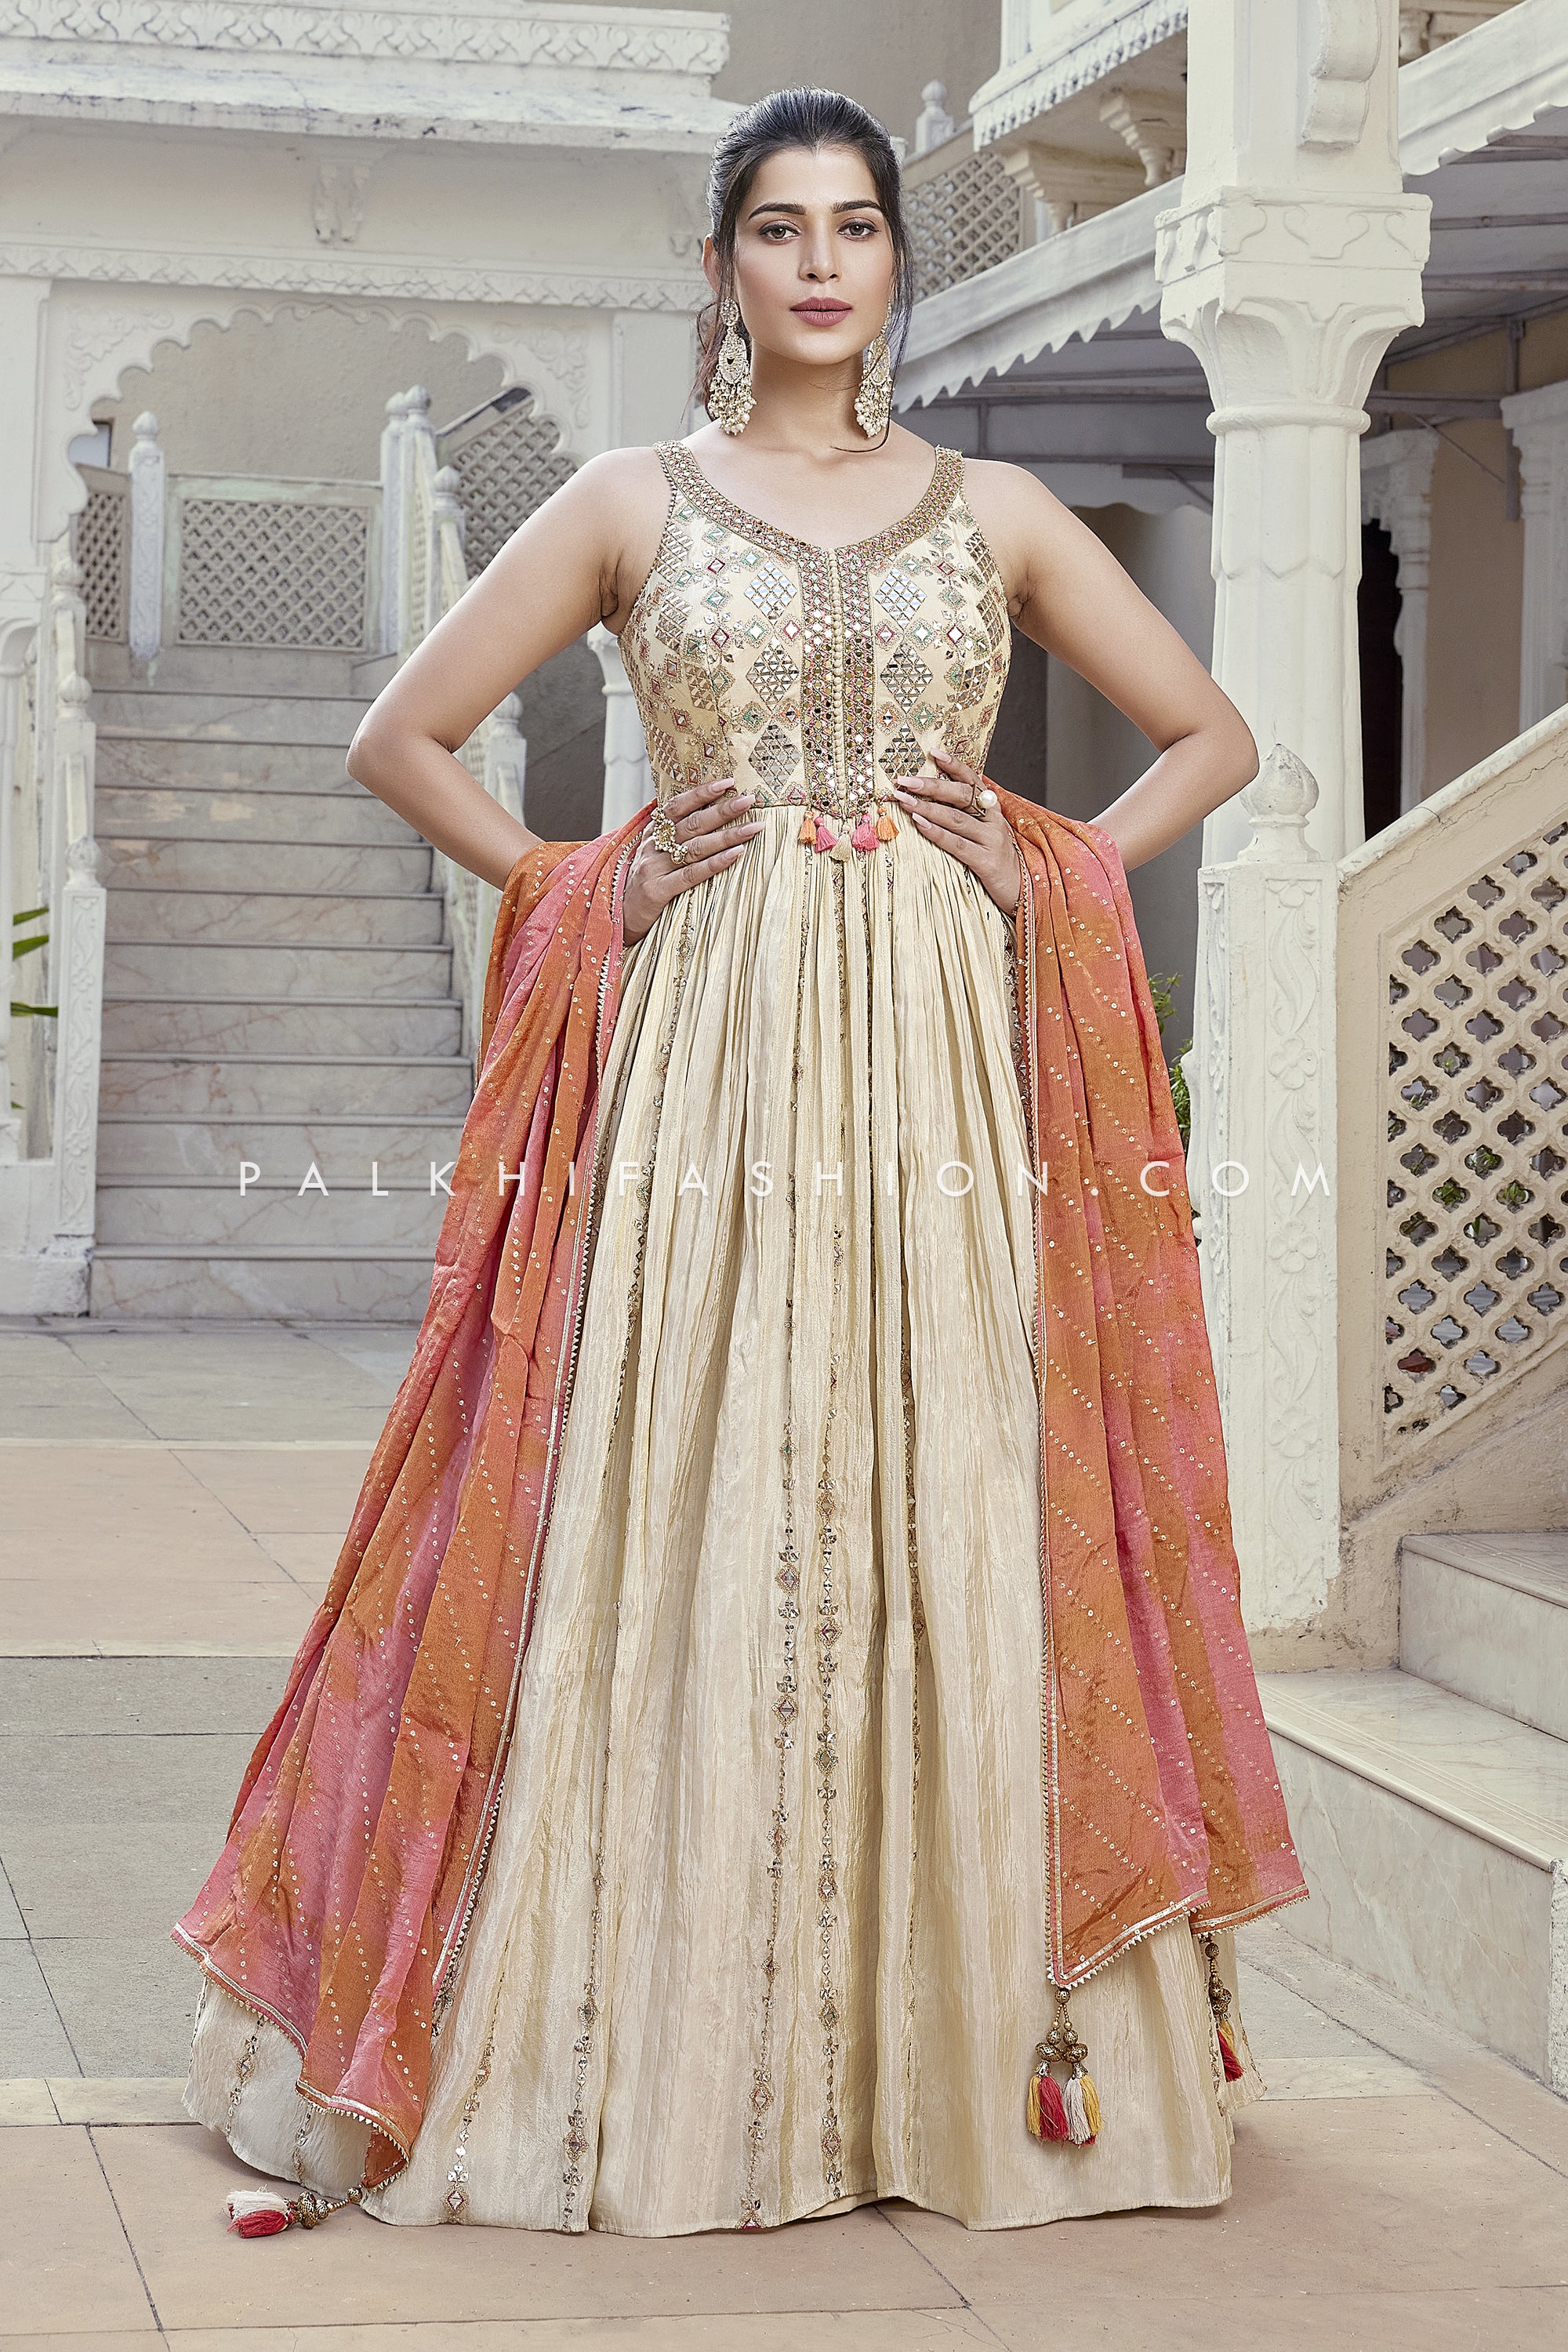 South Indian Traditional Wear Ethnic Glamorous Women Gown Anarkali Frock  Suit | eBay